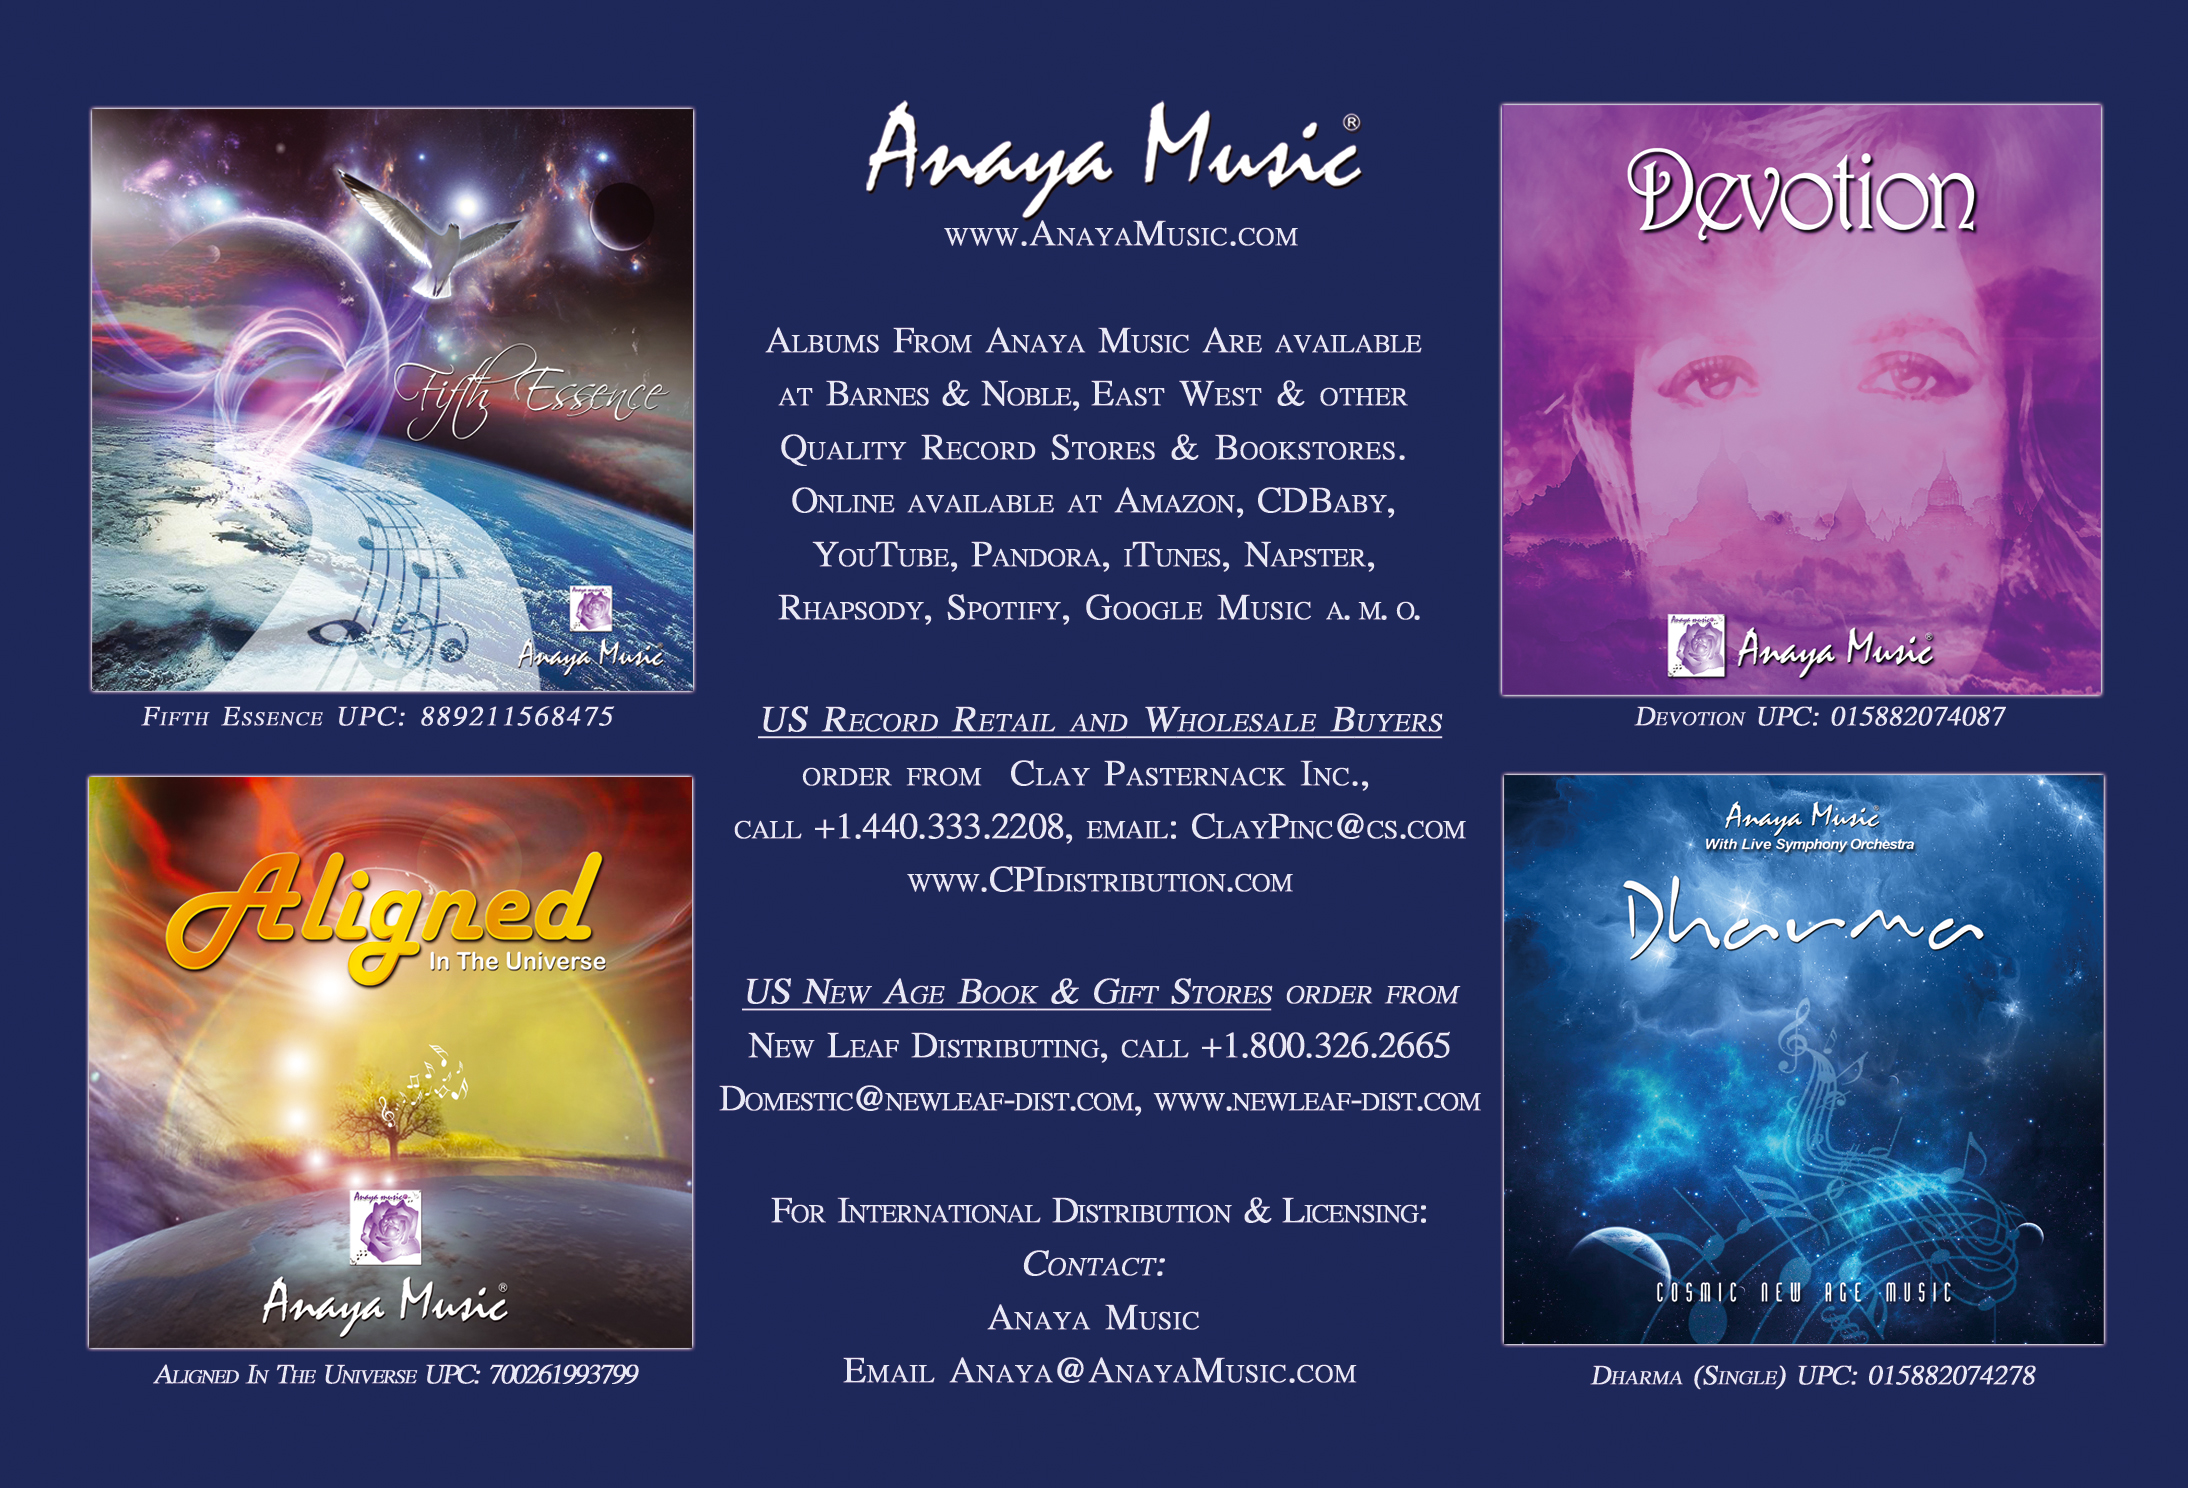 Additional albums by AnayaMusic